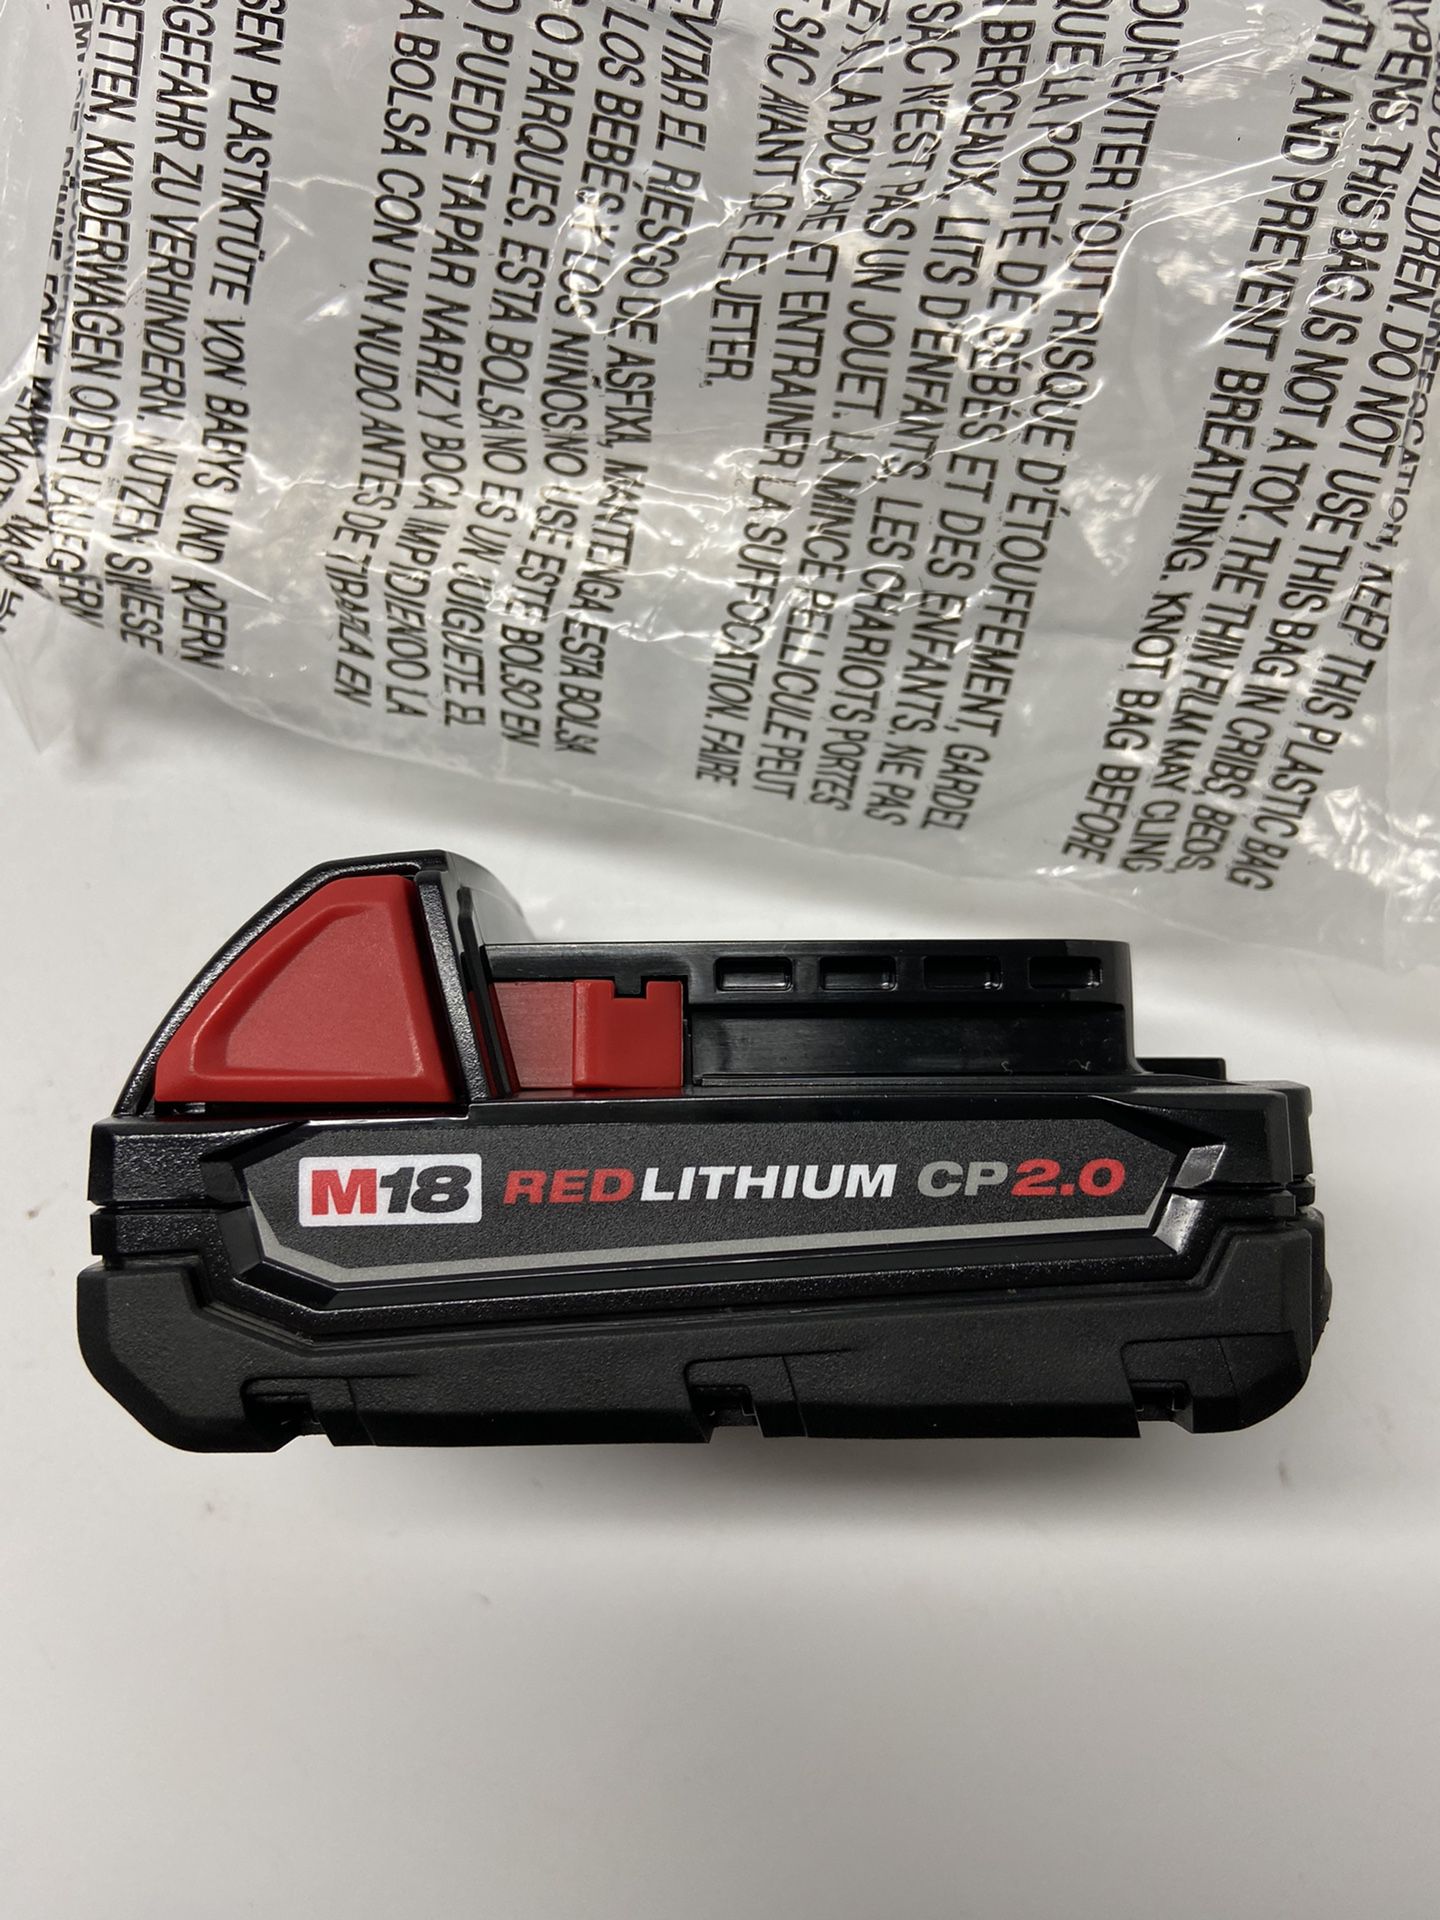 New Milwaukee m18 cp2.0 Ah battery.